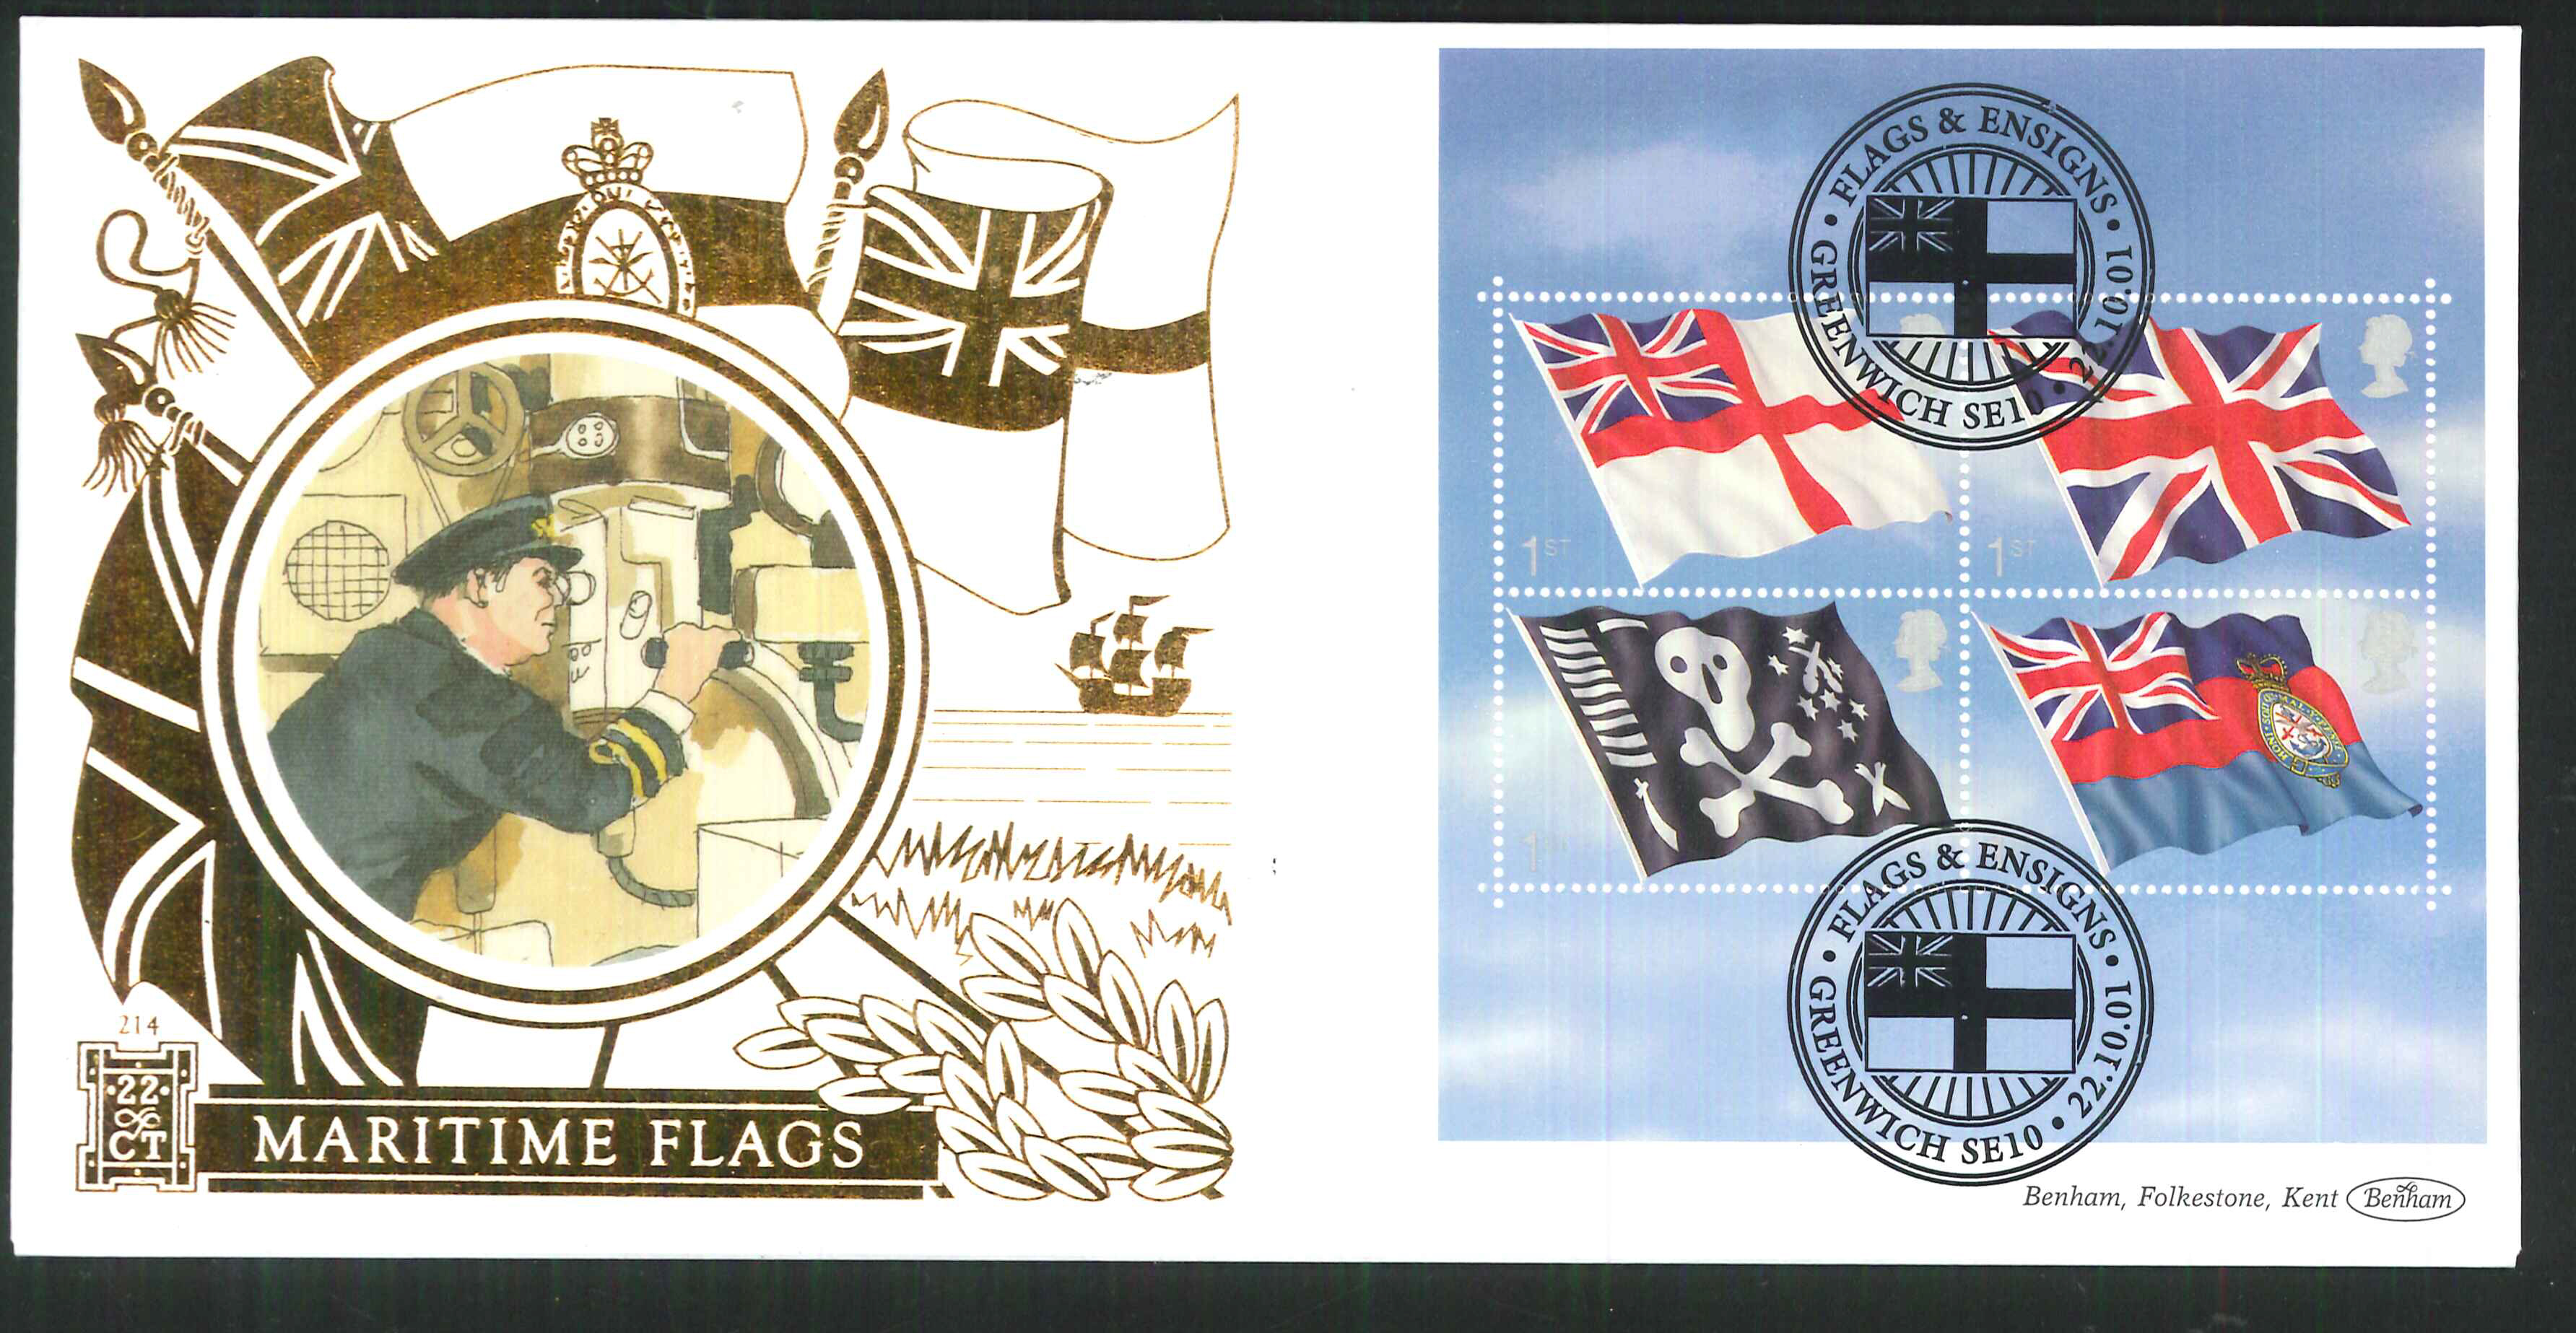 2001 - Flags & Ensigns M/S FDC Benham 22ct Gold 500 - Grenwich SE10 Postmark